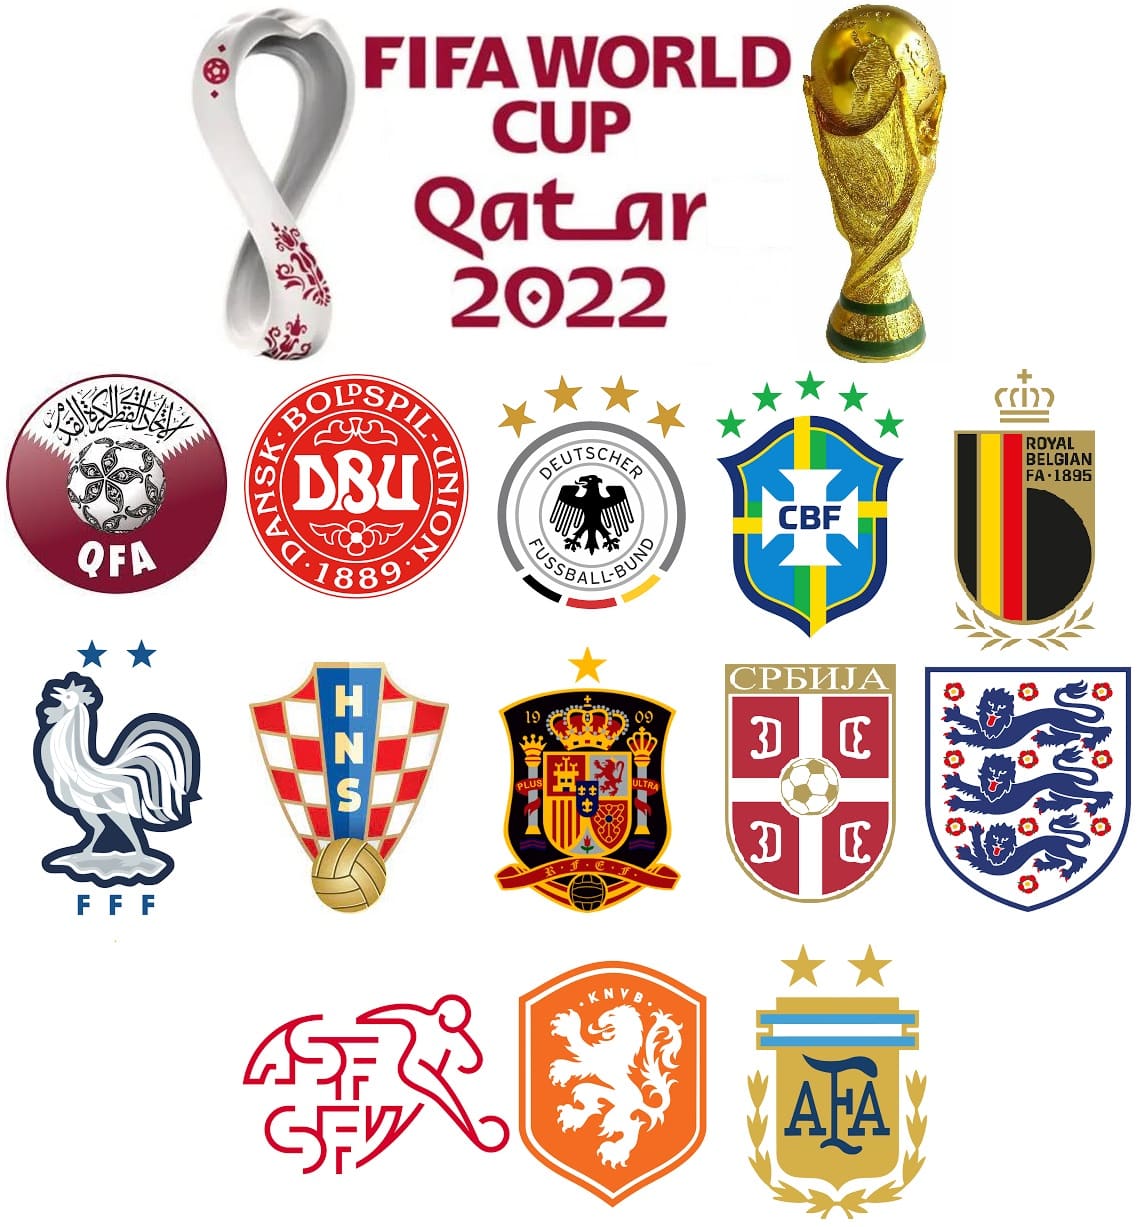 FIFA World Cup 2022 Qatar 1 Year to go